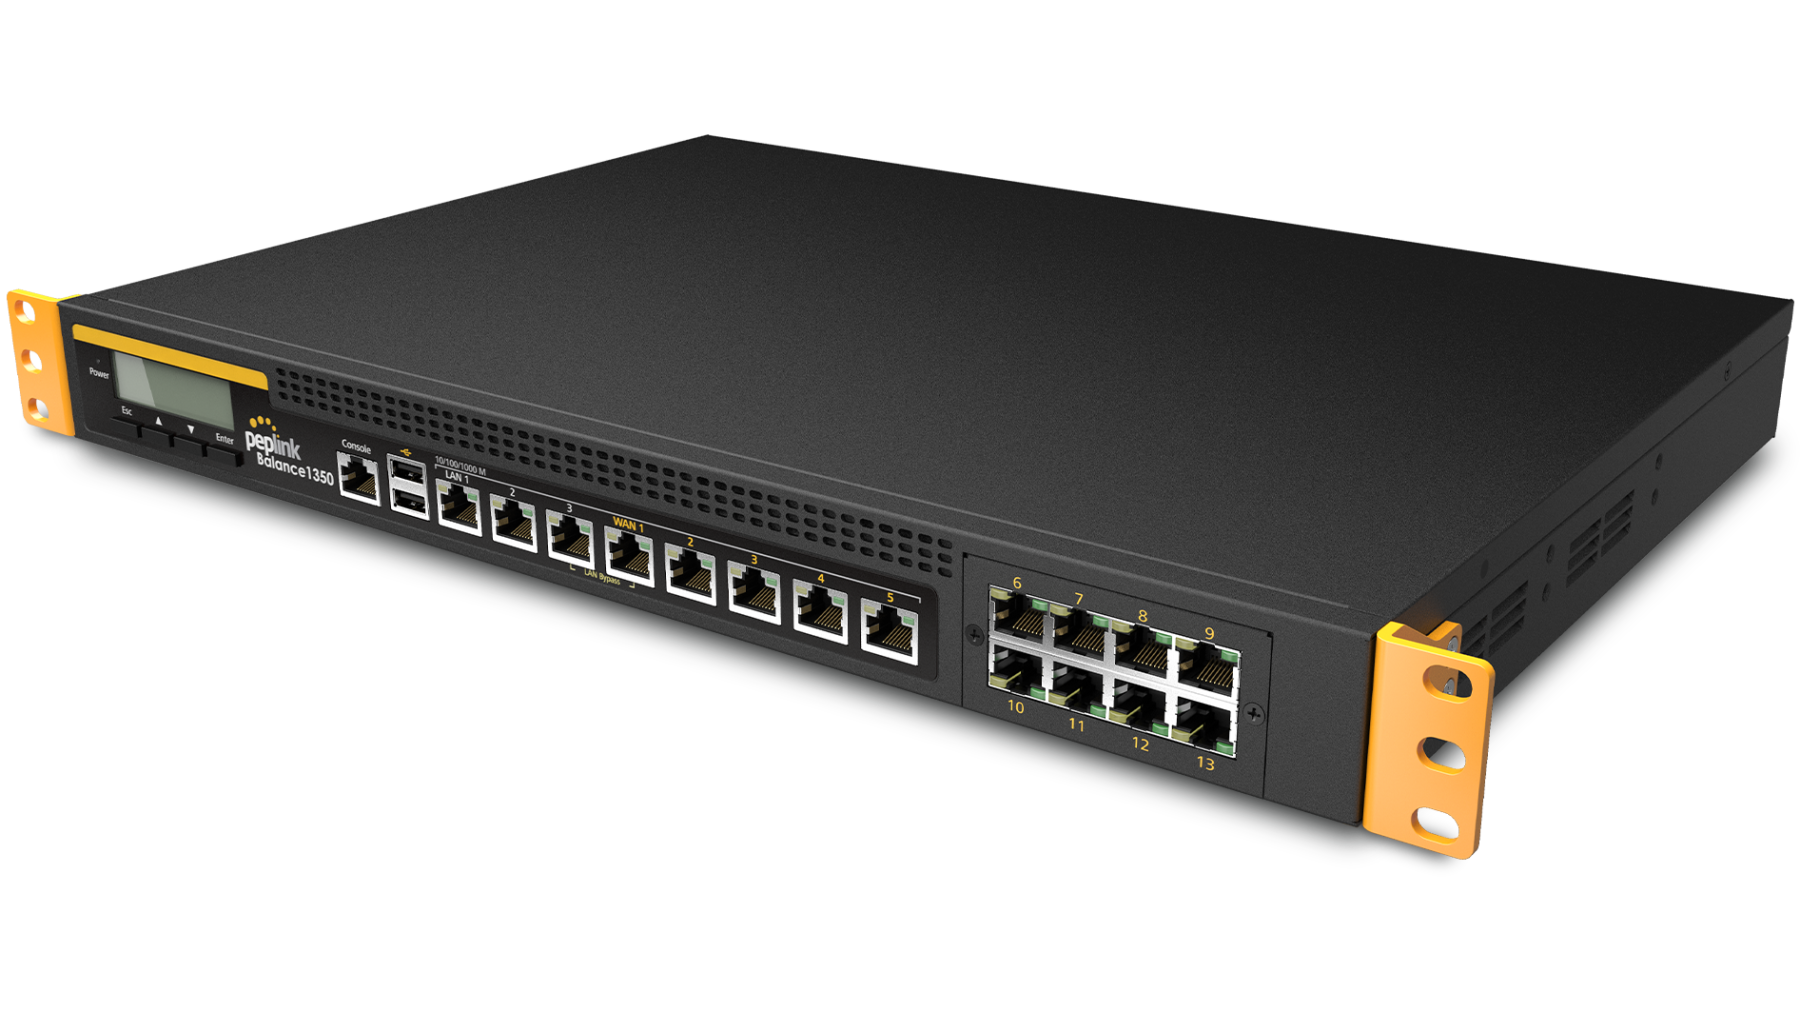   Routeurs 4G LTE Multiwan SdWan Firewall  2.5Gb Balance 1350 : routeur firewall multiWan,13 ports WAN,5 Gb, 500-2000 users